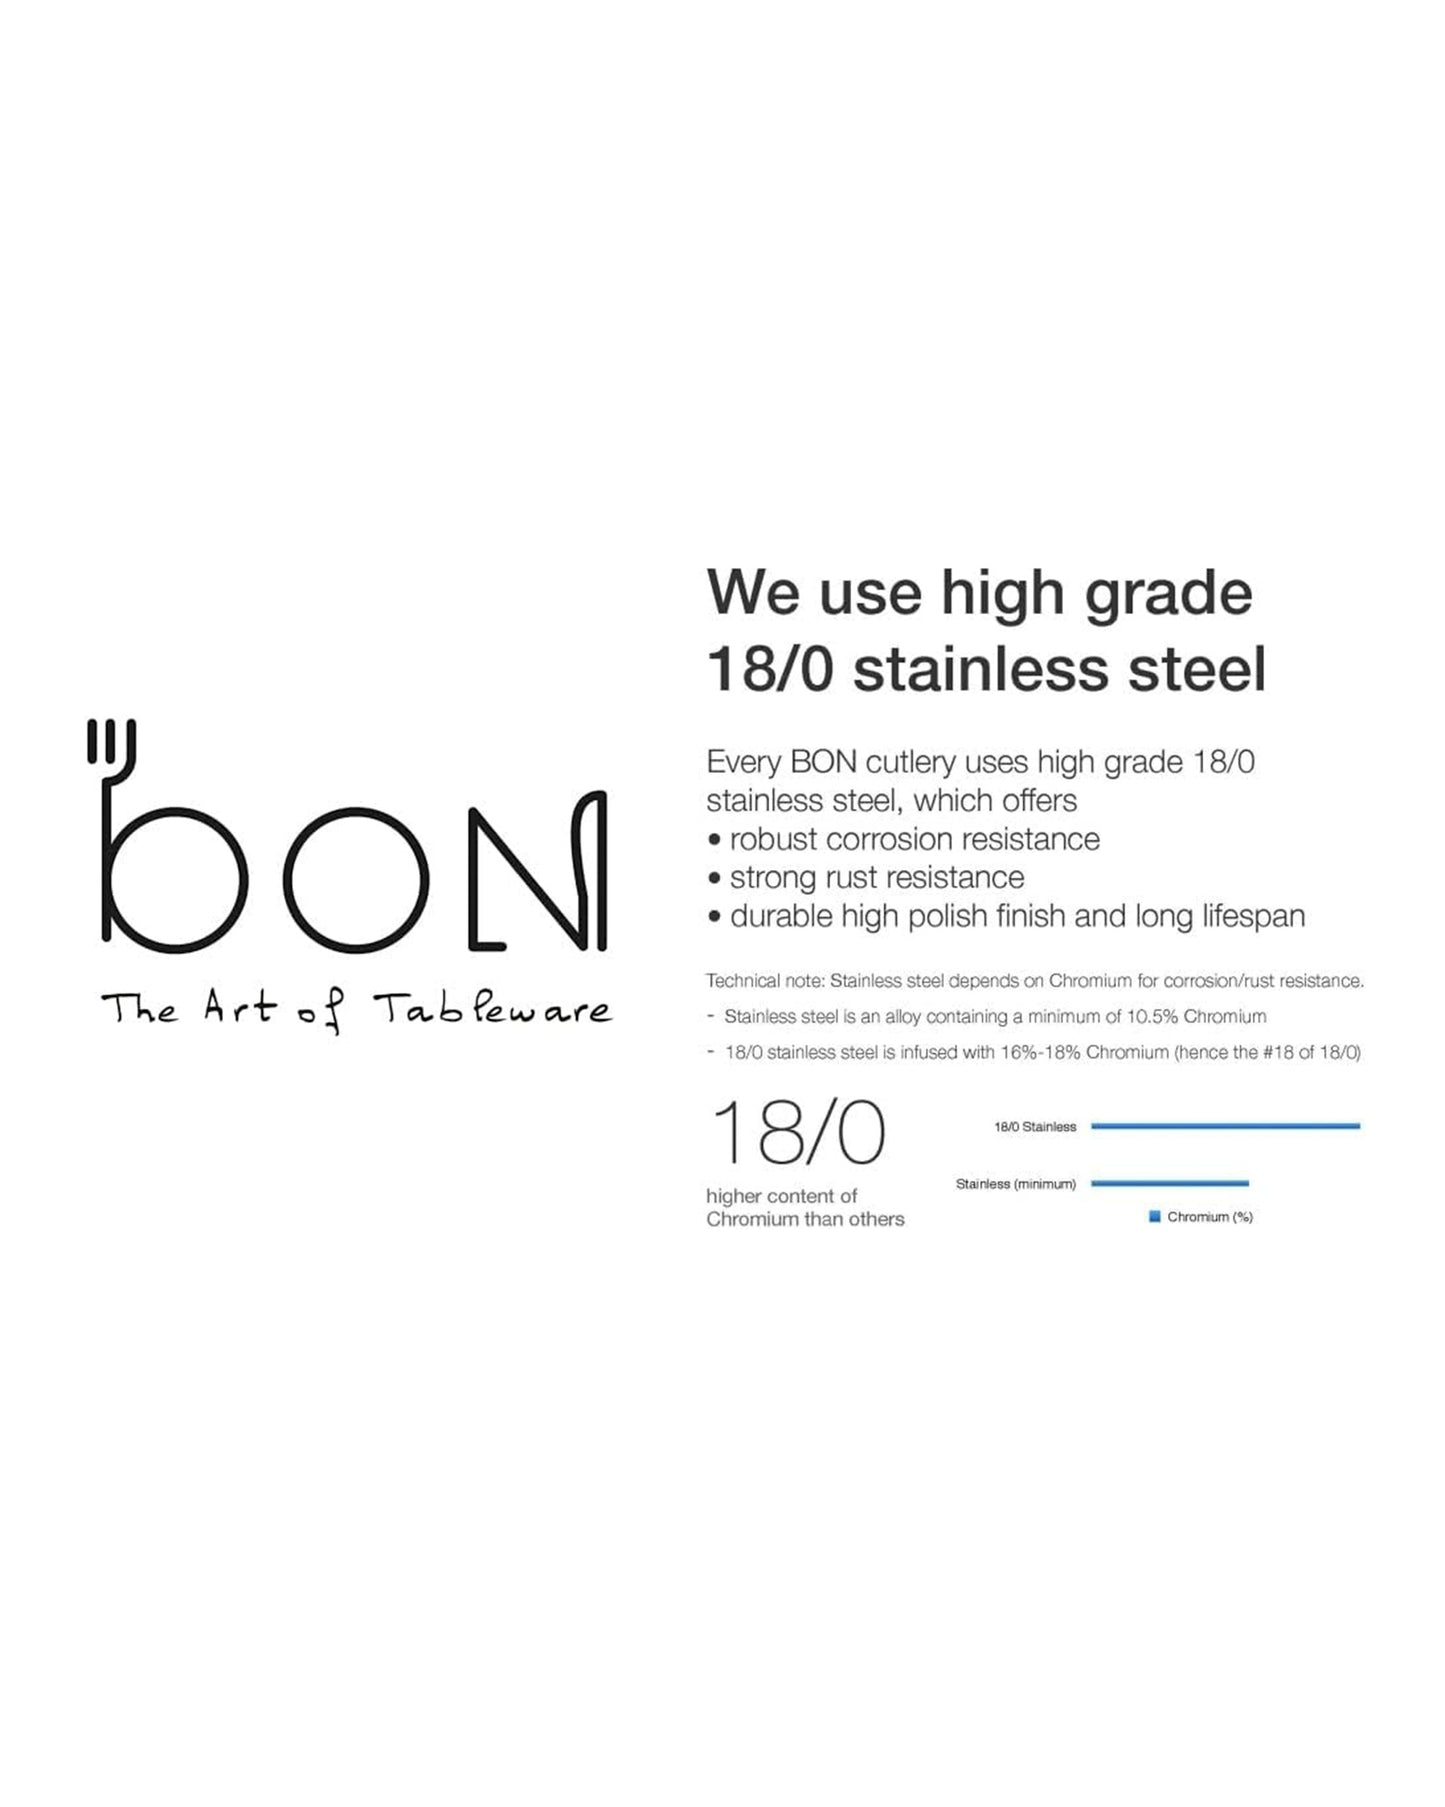 Wholesale Bulk Lot of 10 Bon Elegance 16-Piece Stainless Steel Cutlery Sets